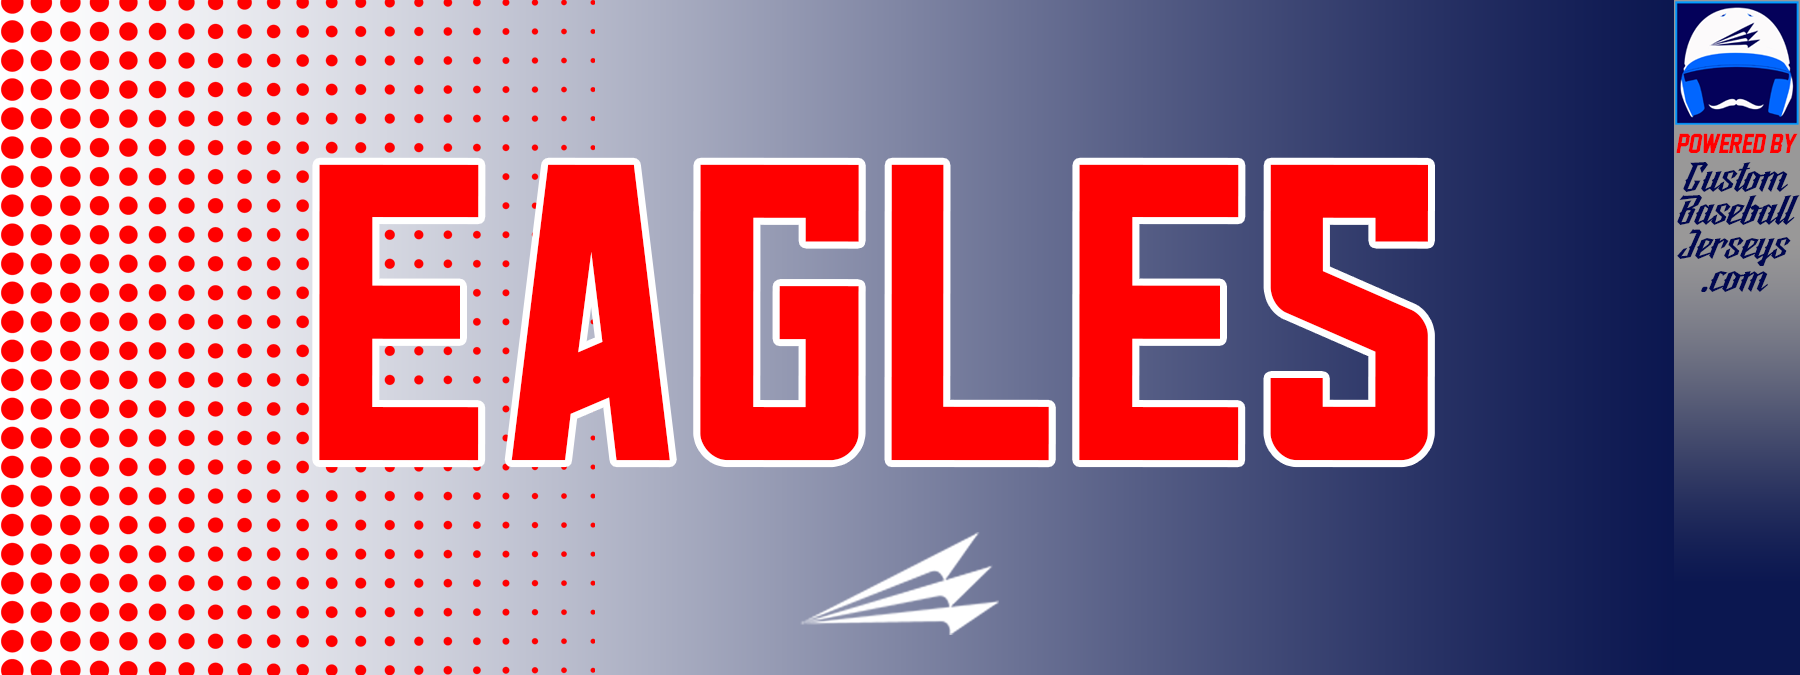 DEA Eagles Custom Patriotic Baseball Jerseys - Triton Mockup Portal